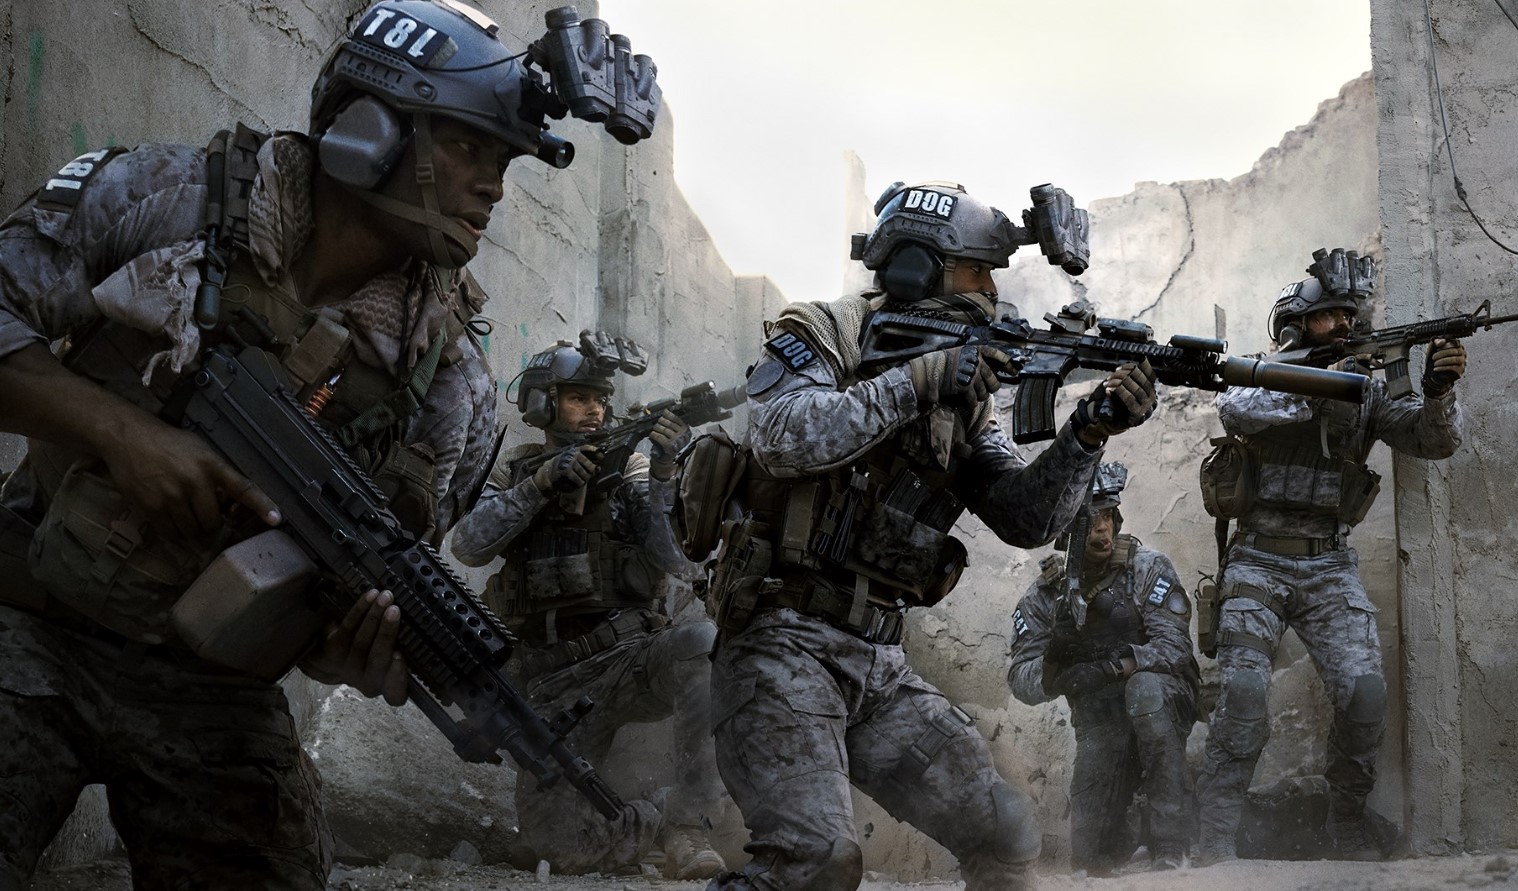 [Spoilers] Call of Duty: Modern Warfare incluye una polémica escena que causa revuelo